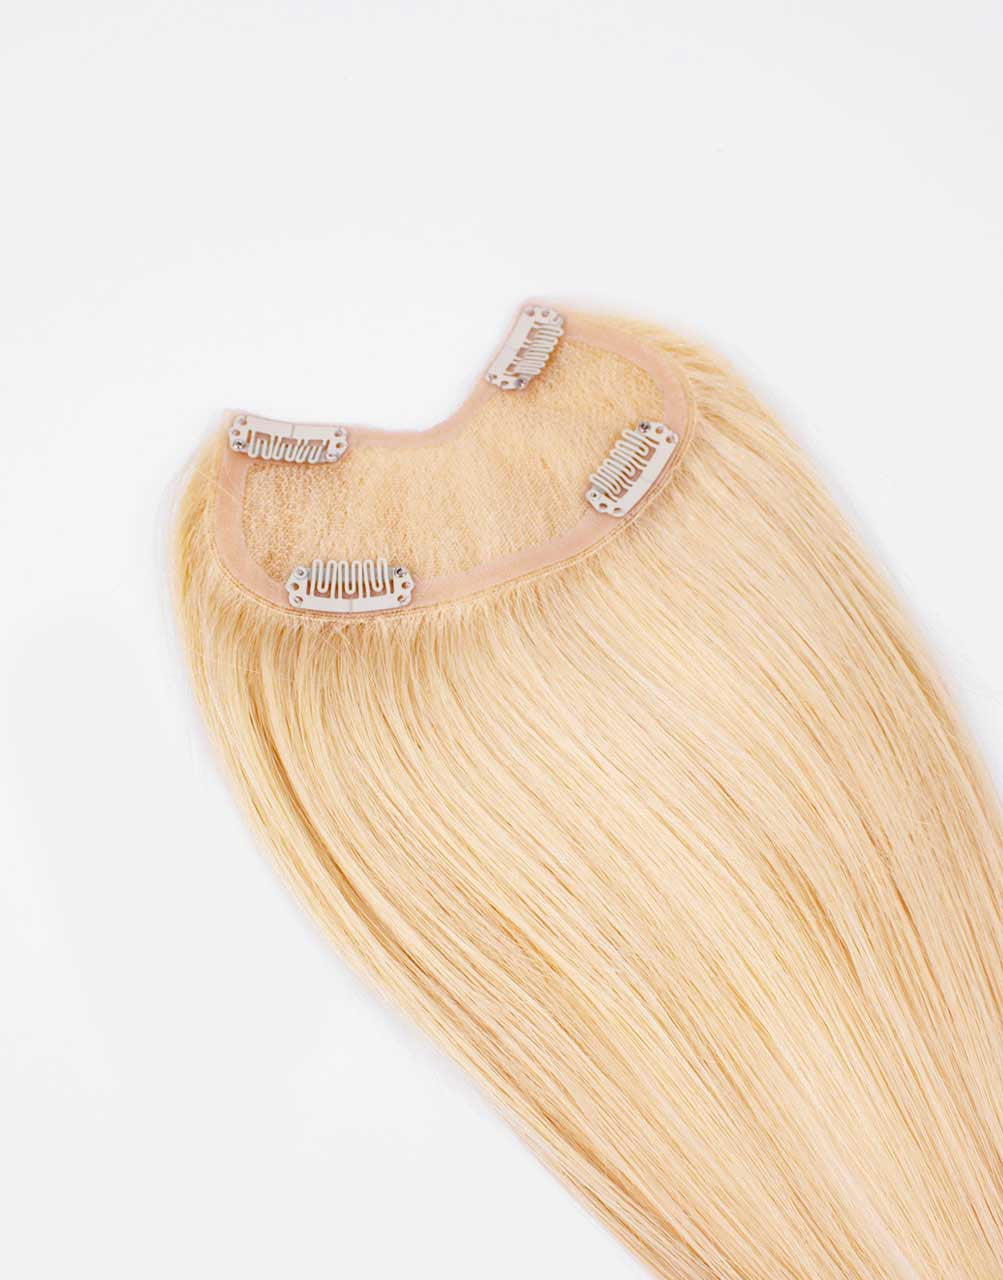 v crown clip-in extension in blonde